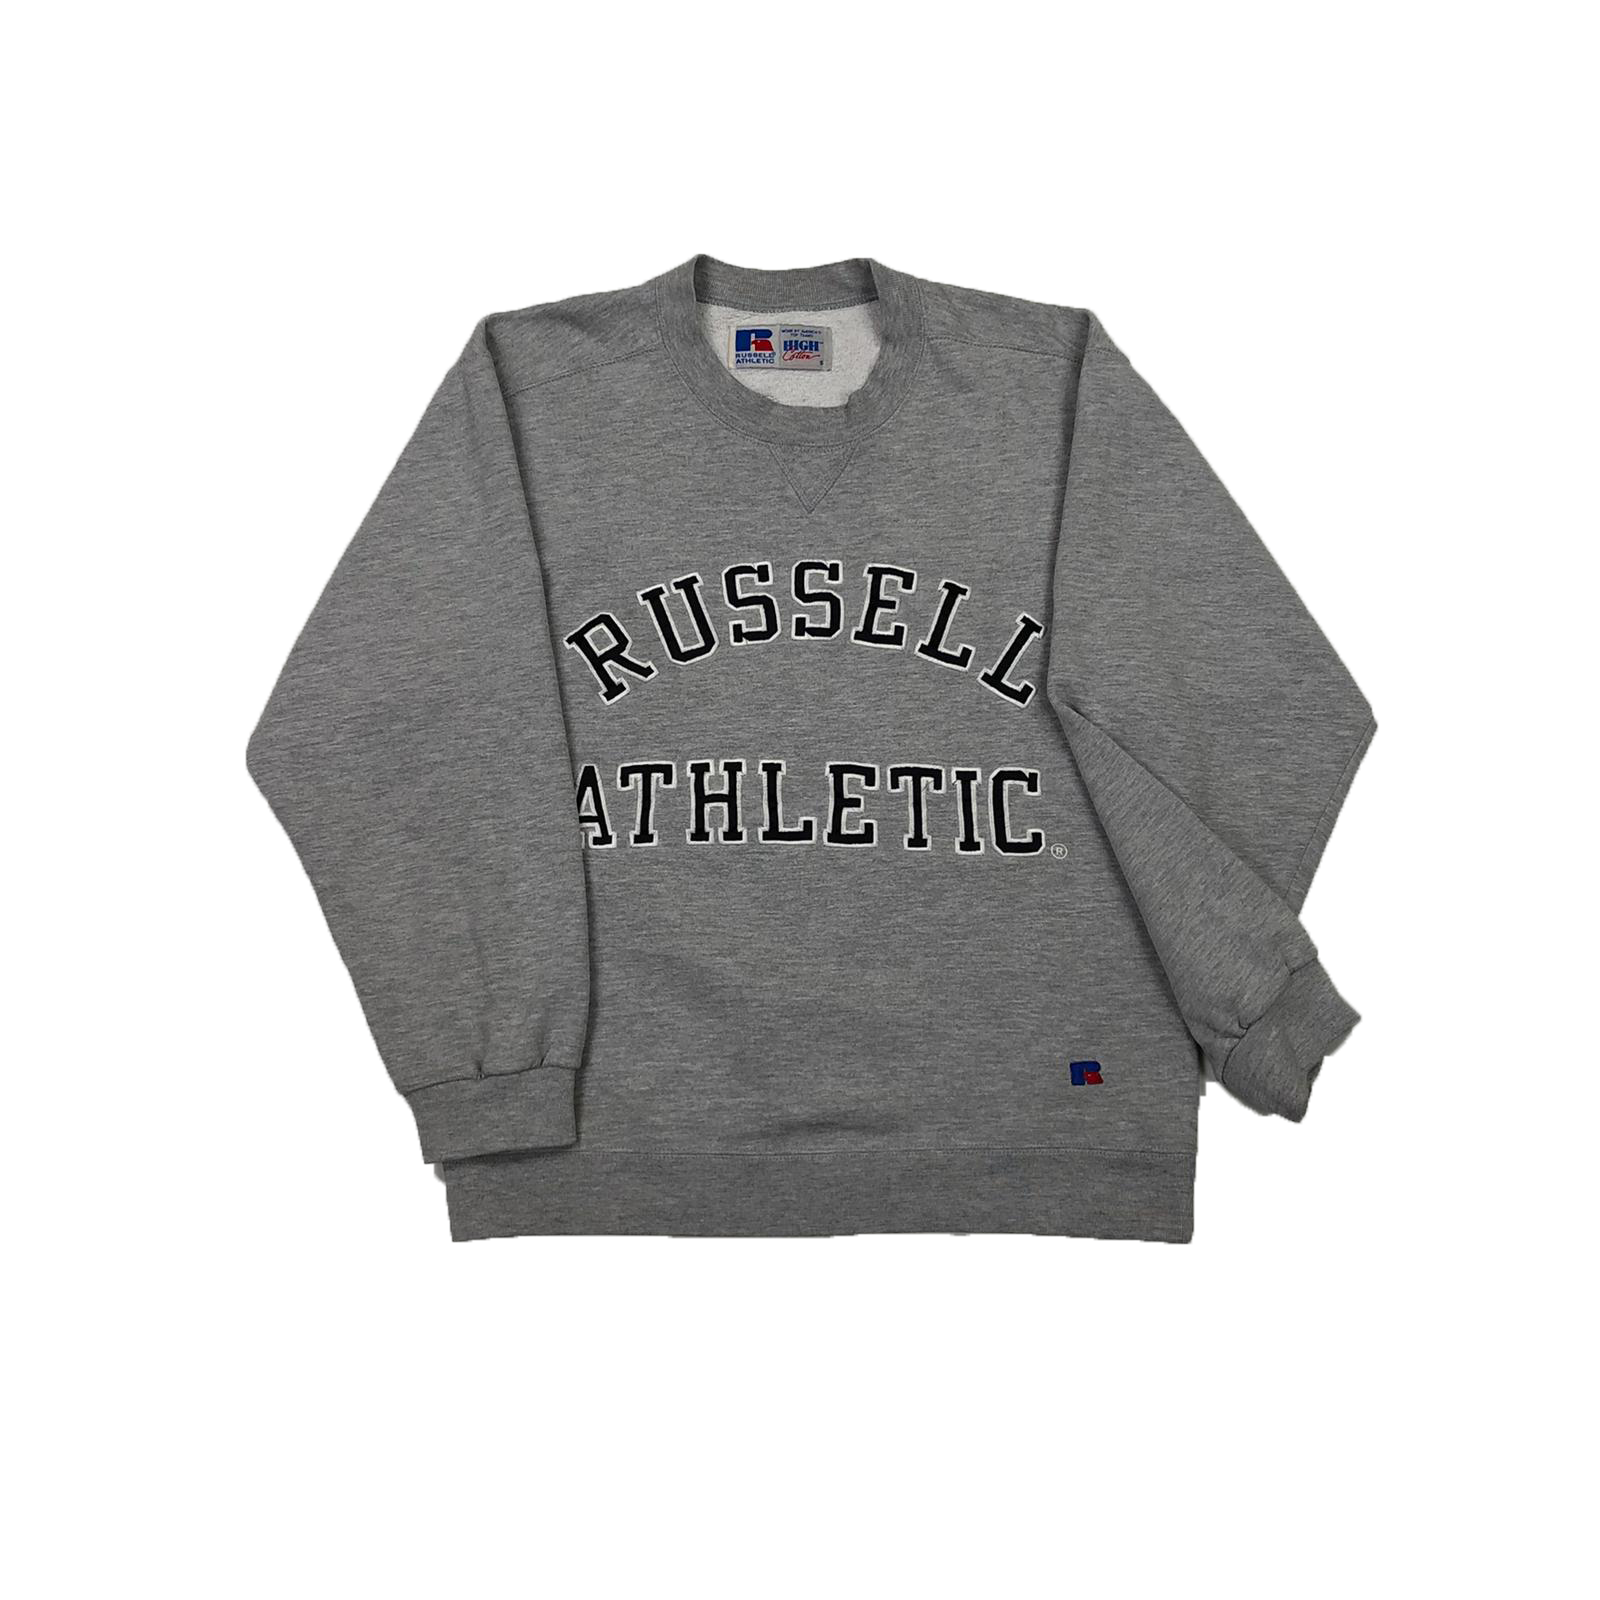 90's Russell Athletic sweatshirt